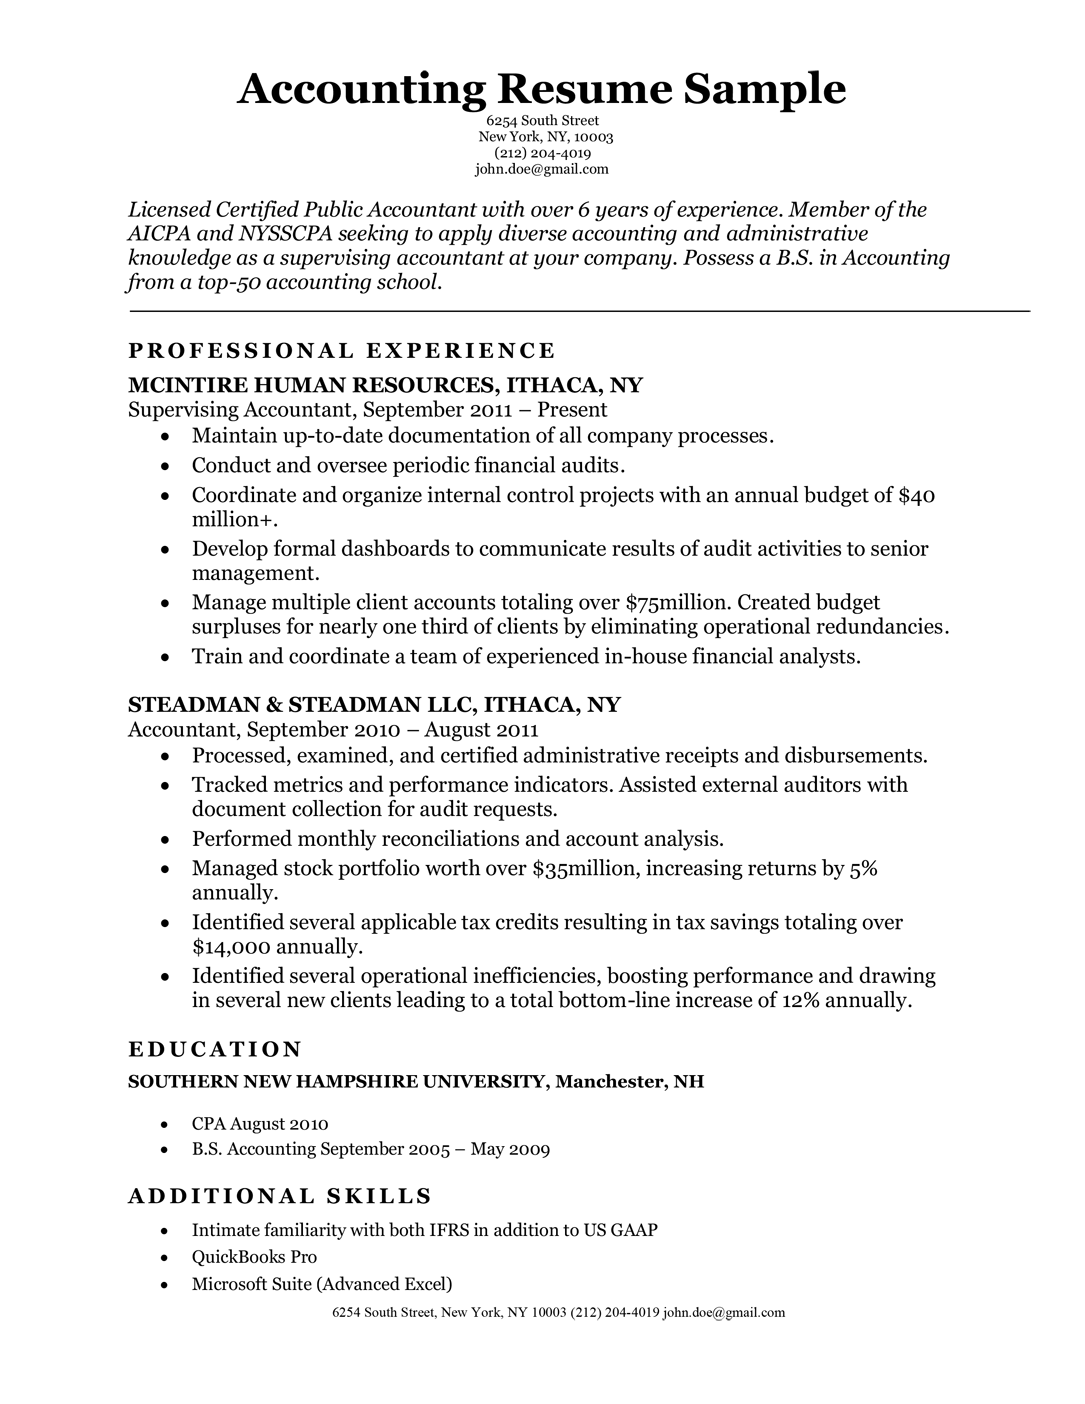 Accounting resume sample